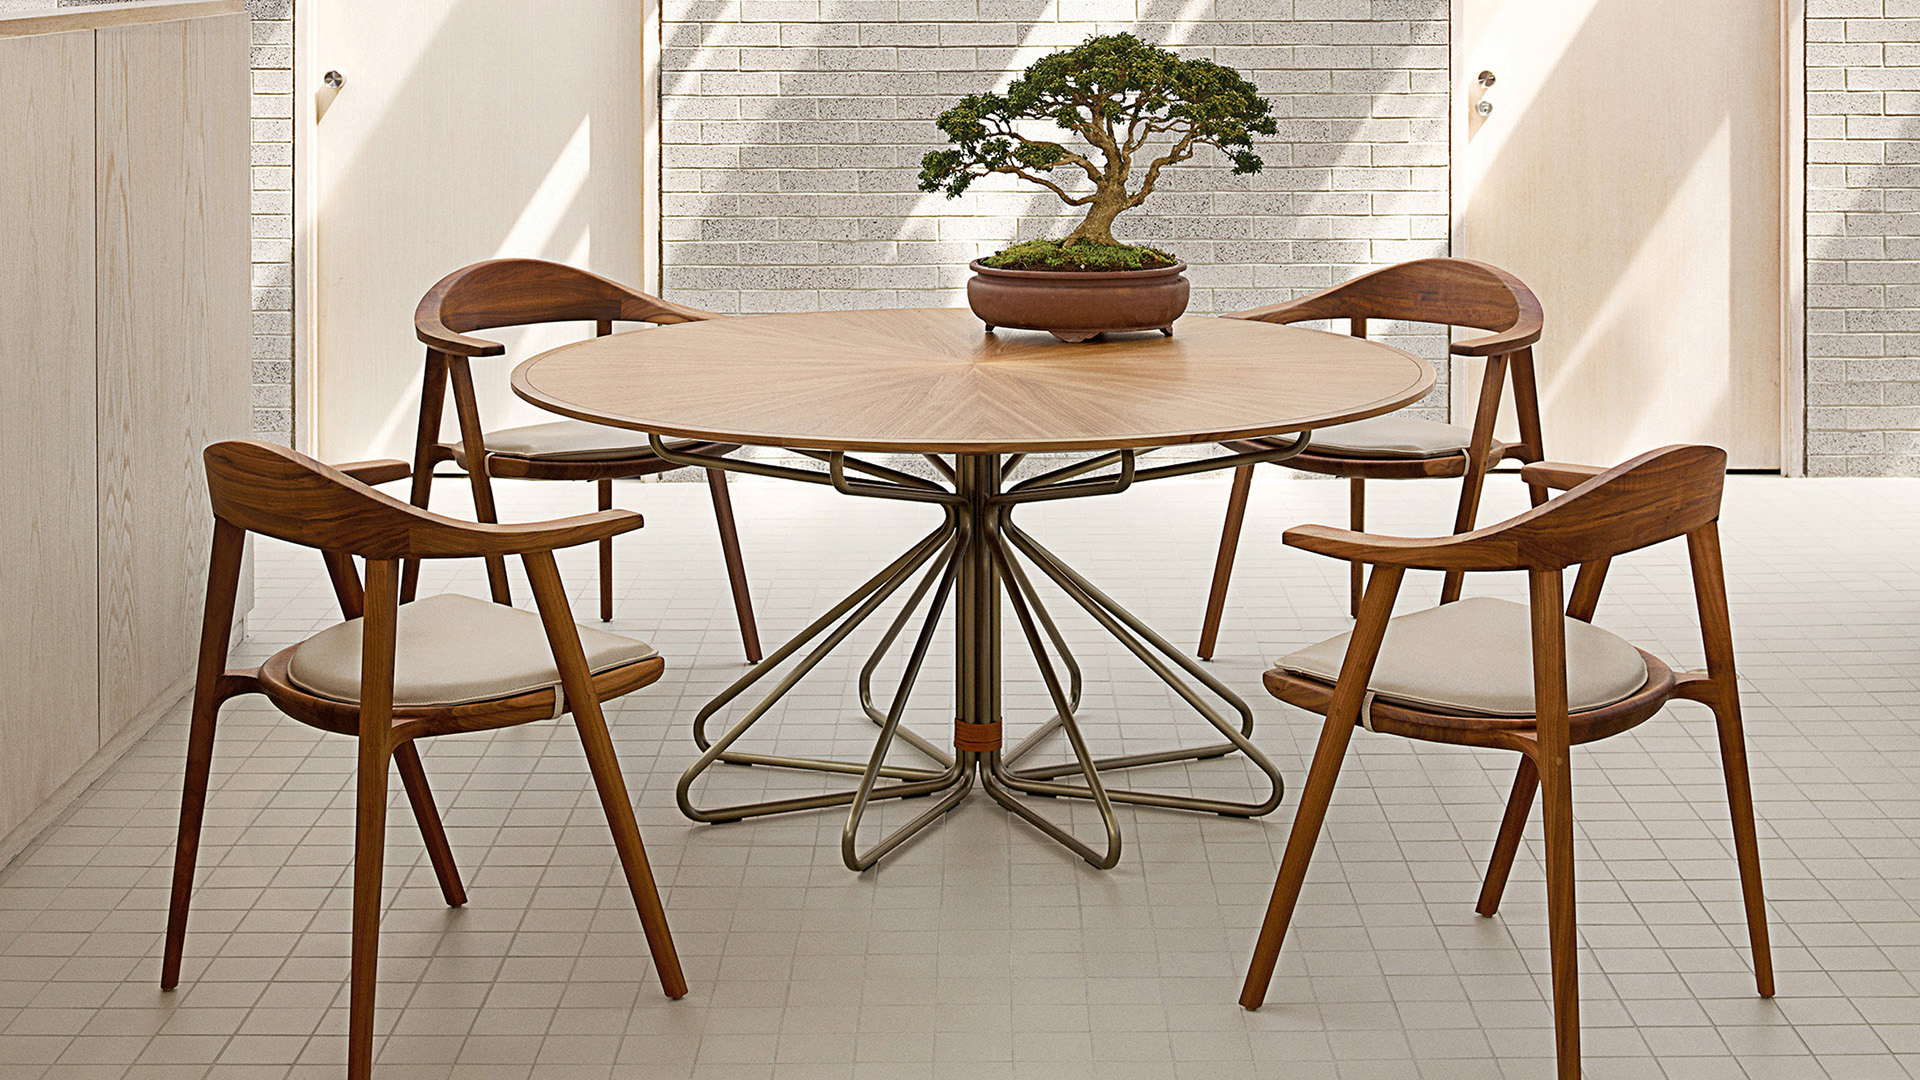 Mantis Chair, Geometric Dining Table, Lifestyle